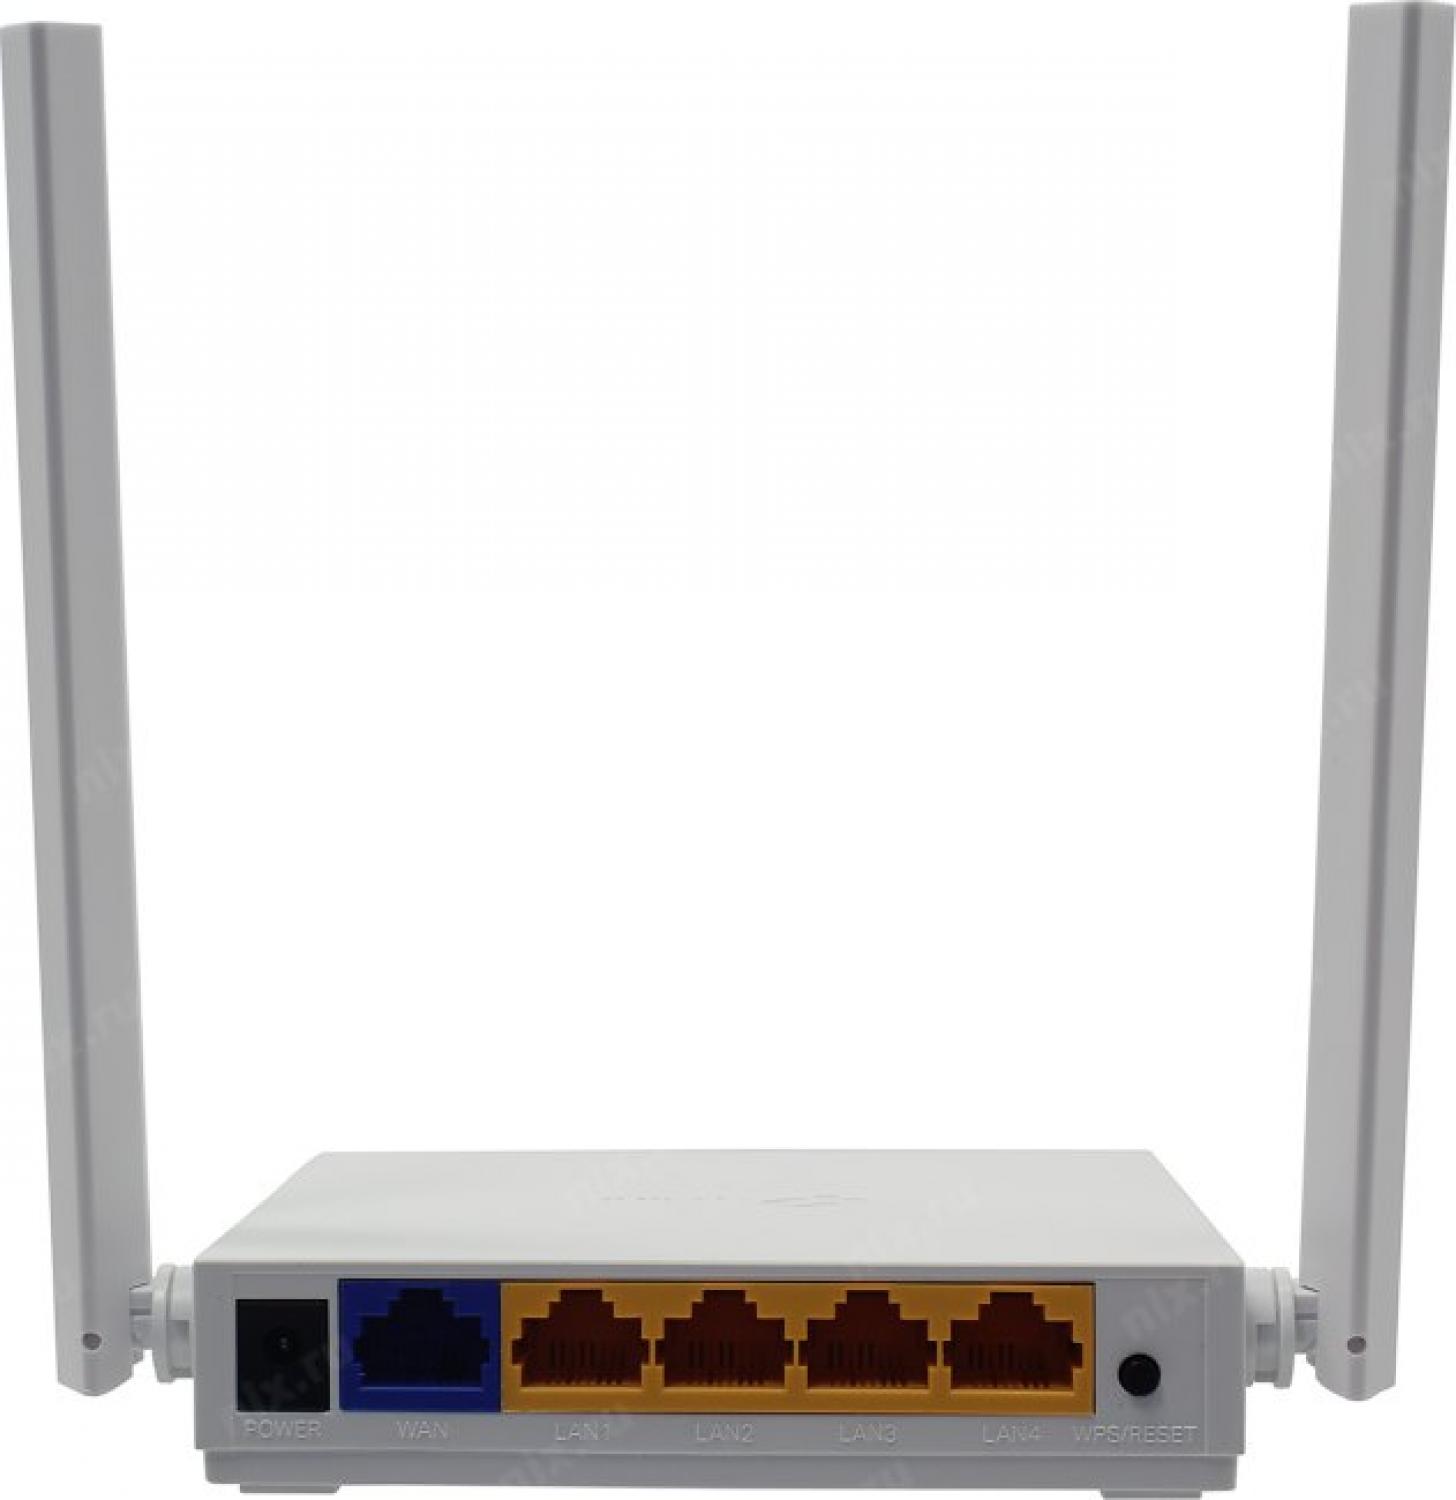  TP-Link TL-WR844N, N300 Wi Fi роутер, до 300 Мбит/с на 2,4 ГГц, 2 антенны, 1 порт WAN 10/100 Мбит/с + 4 порта LAN 10/100 Мбит/с